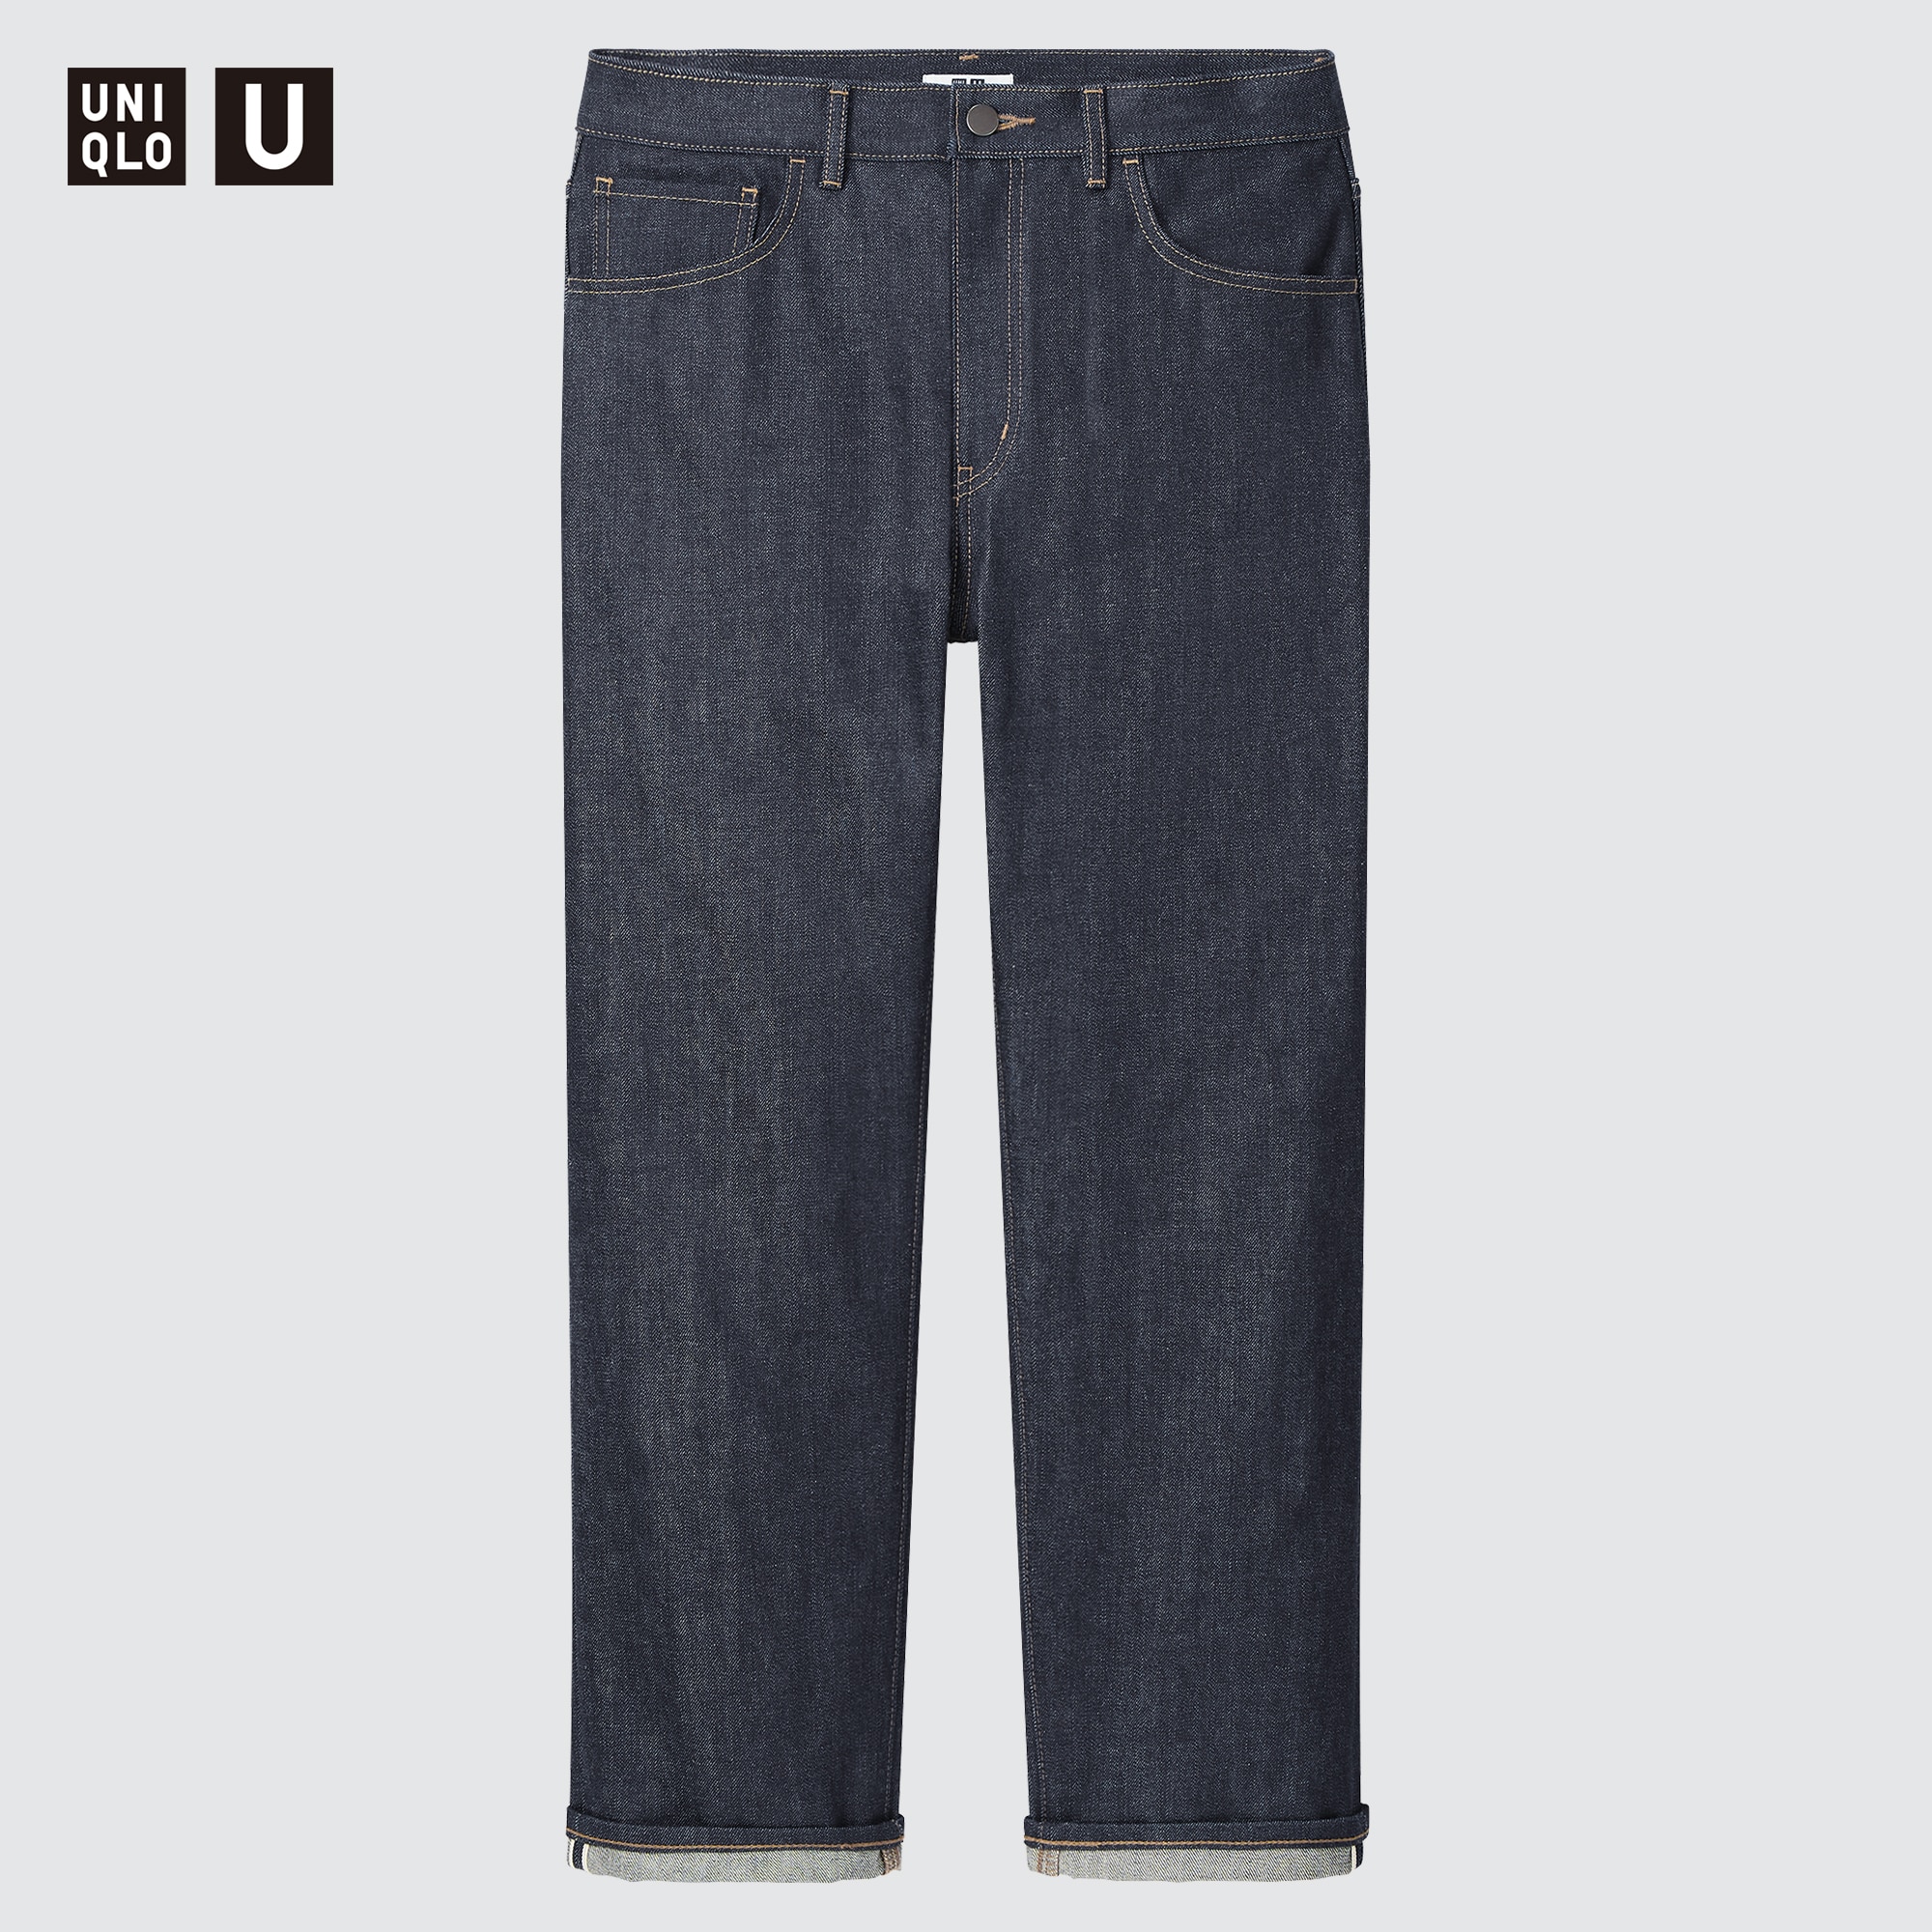 UNIQLO Denim Jeans Try On! - (Stretch Selvedge, Skinny, Regular Fit) 